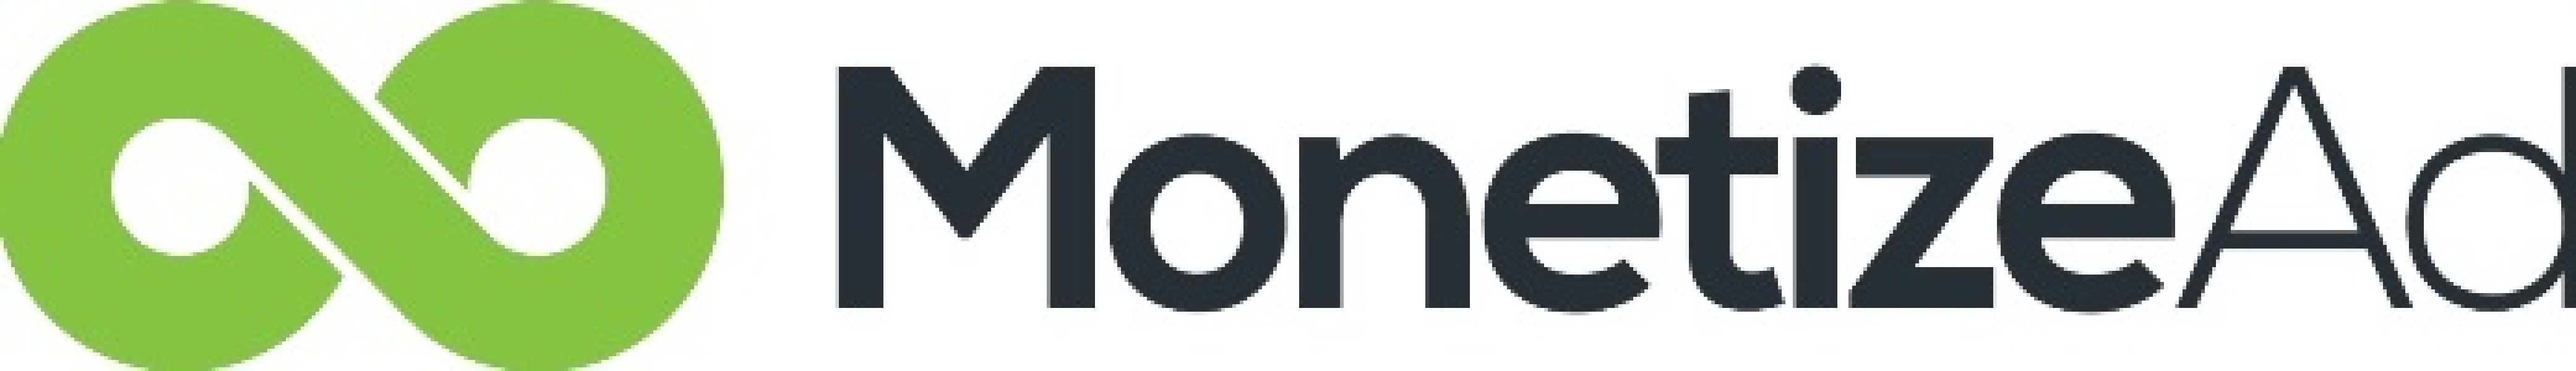 monetizead-logo